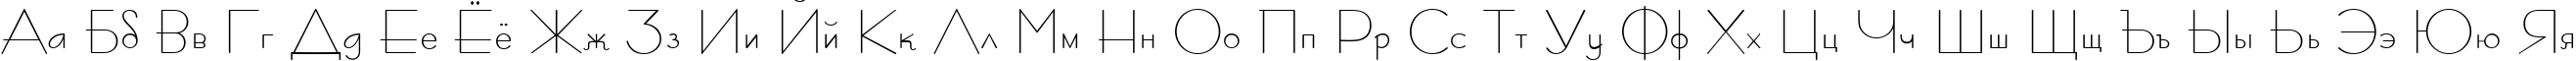 Пример написания русского алфавита шрифтом Konkord-Retro